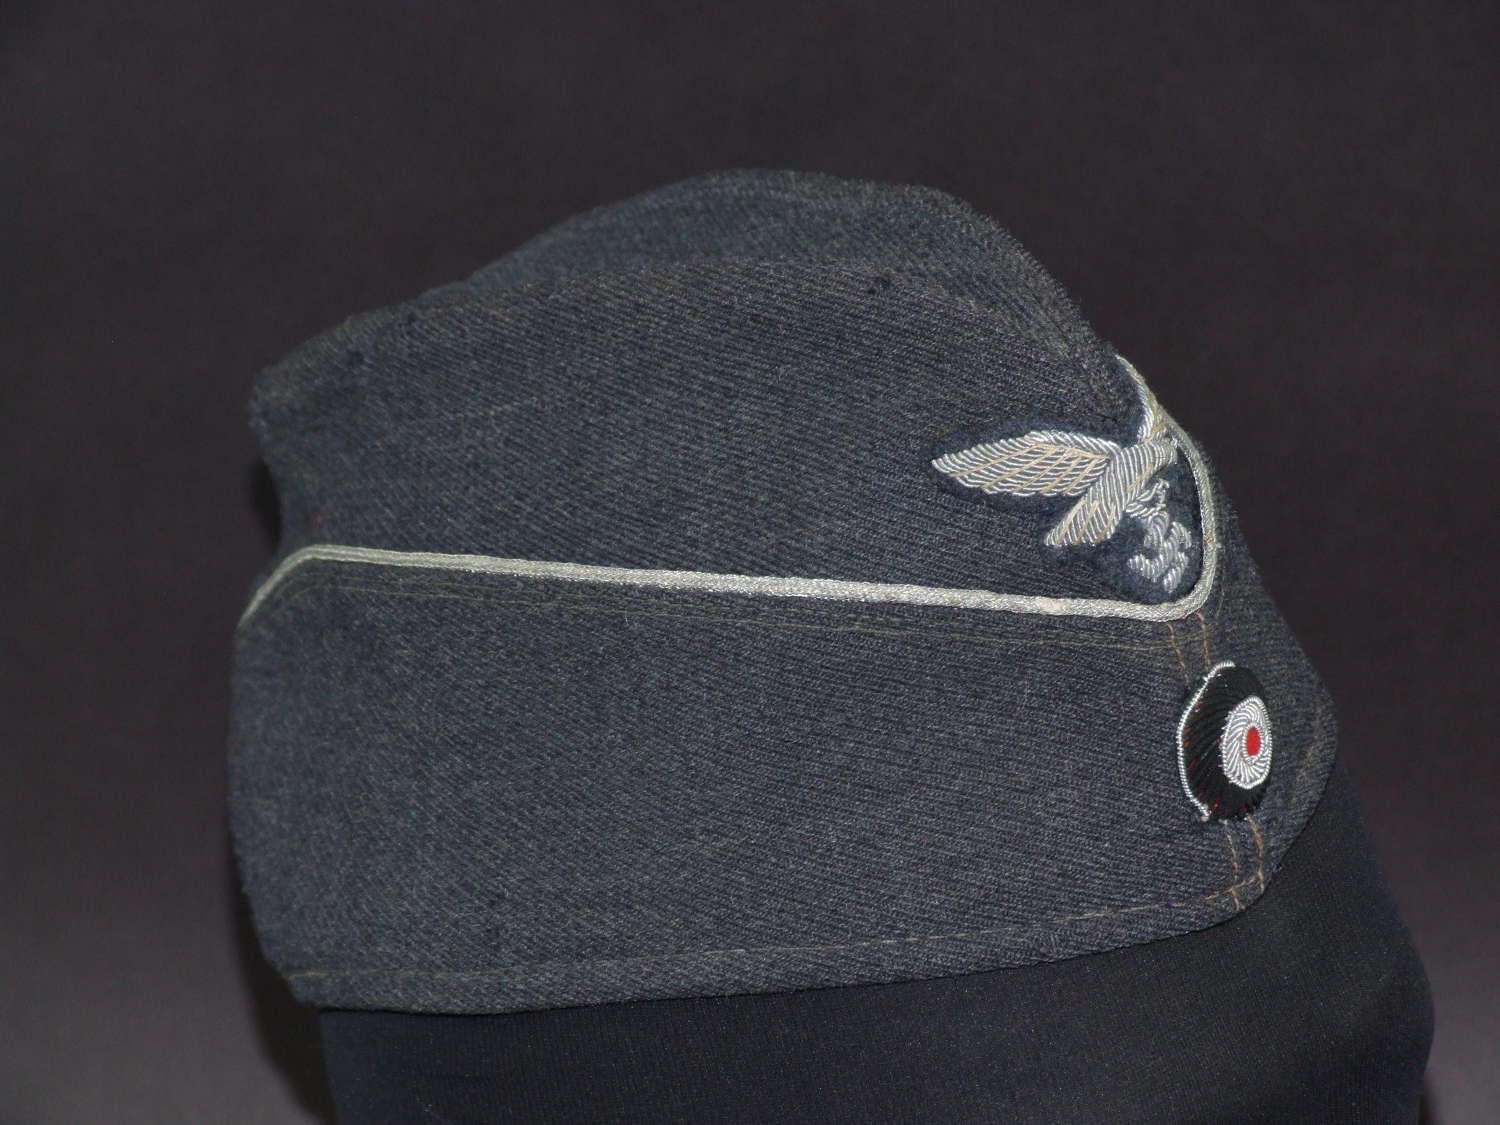 Luftwaffe Officers Fliegermutze (Field Service Cap)